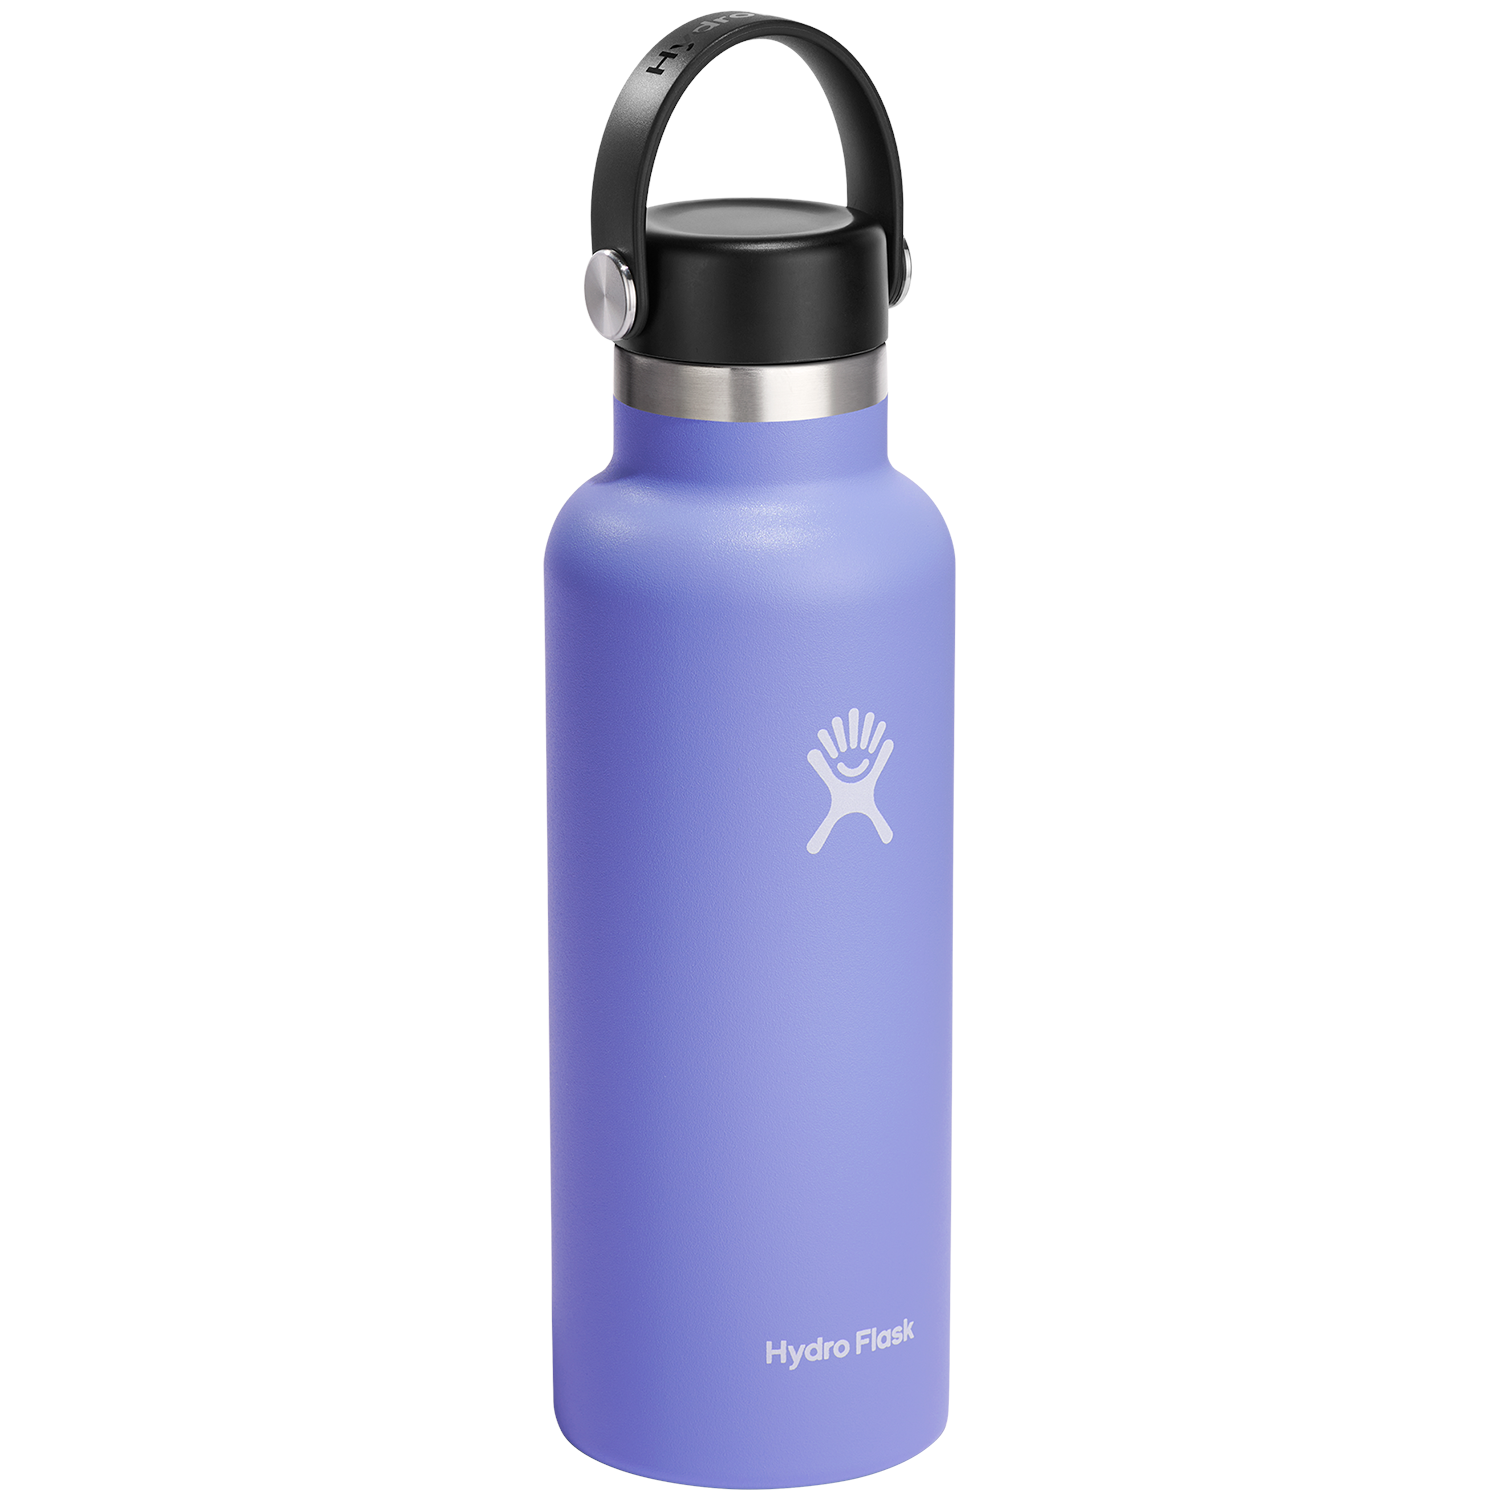 https://images.evo.com/imgp/zoom/167436/997830/hydro-flask-18oz-standard-mouth-water-bottle-.jpg